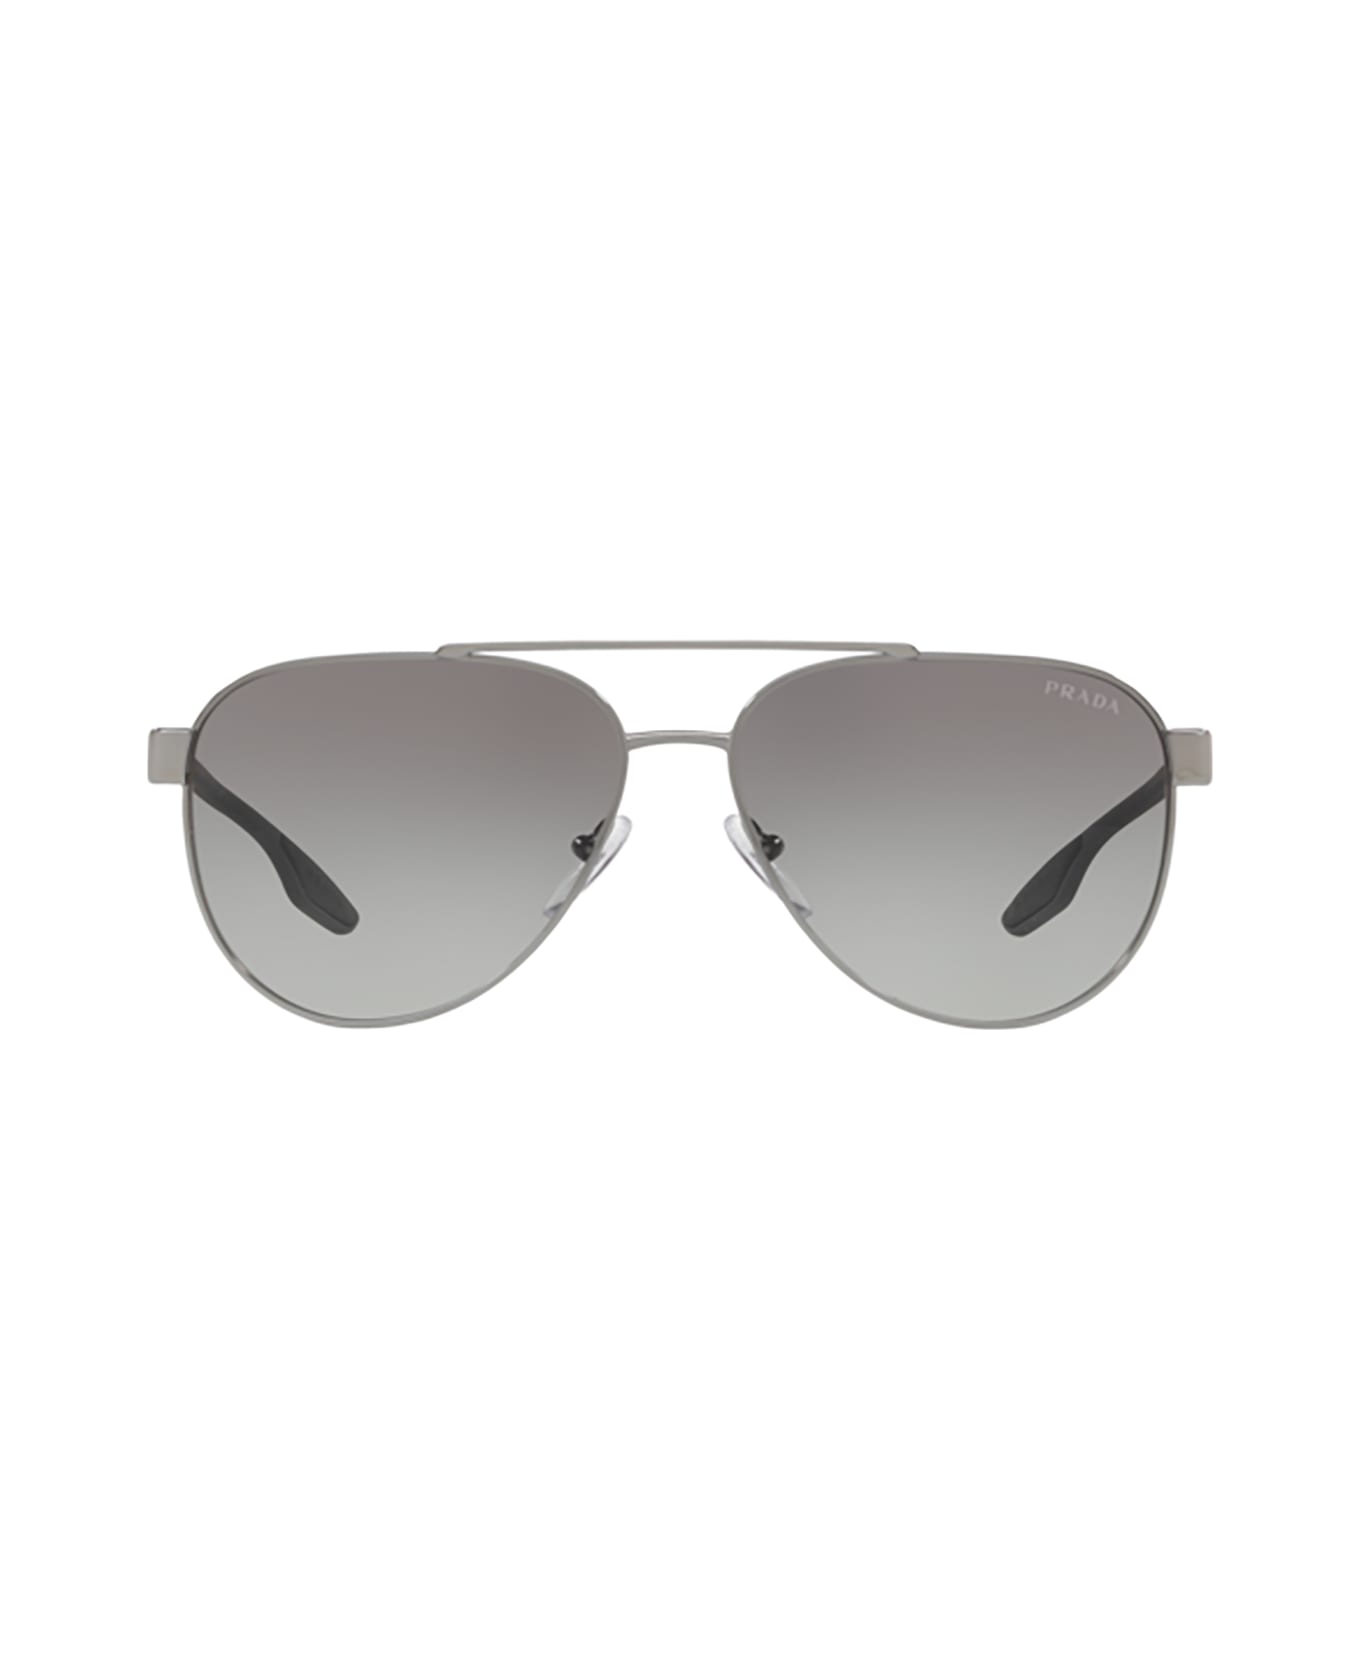 Prada Linea Rossa Ps 54ts Gunmetal Sunglasses - Gunmetal サングラス